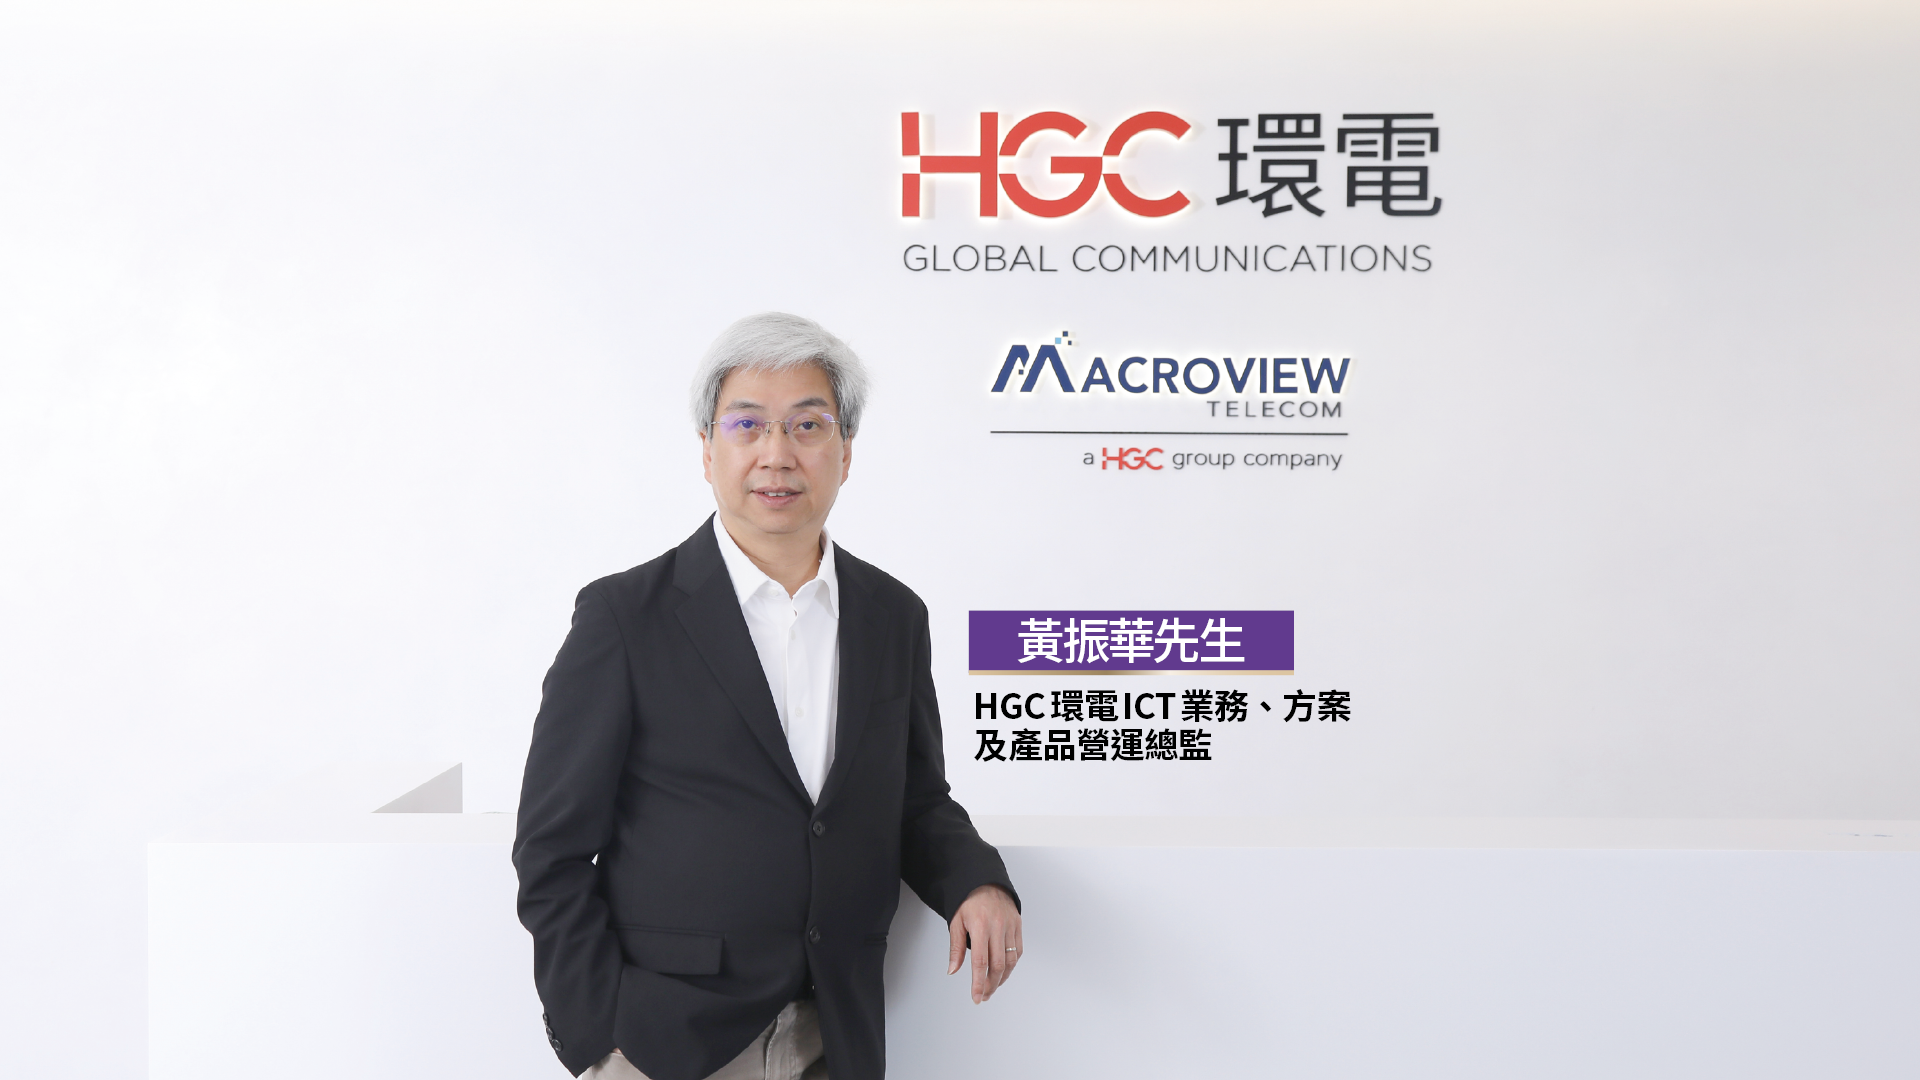 HGC 環電 ICT 業務、方案及產品營運總監黃振華先生